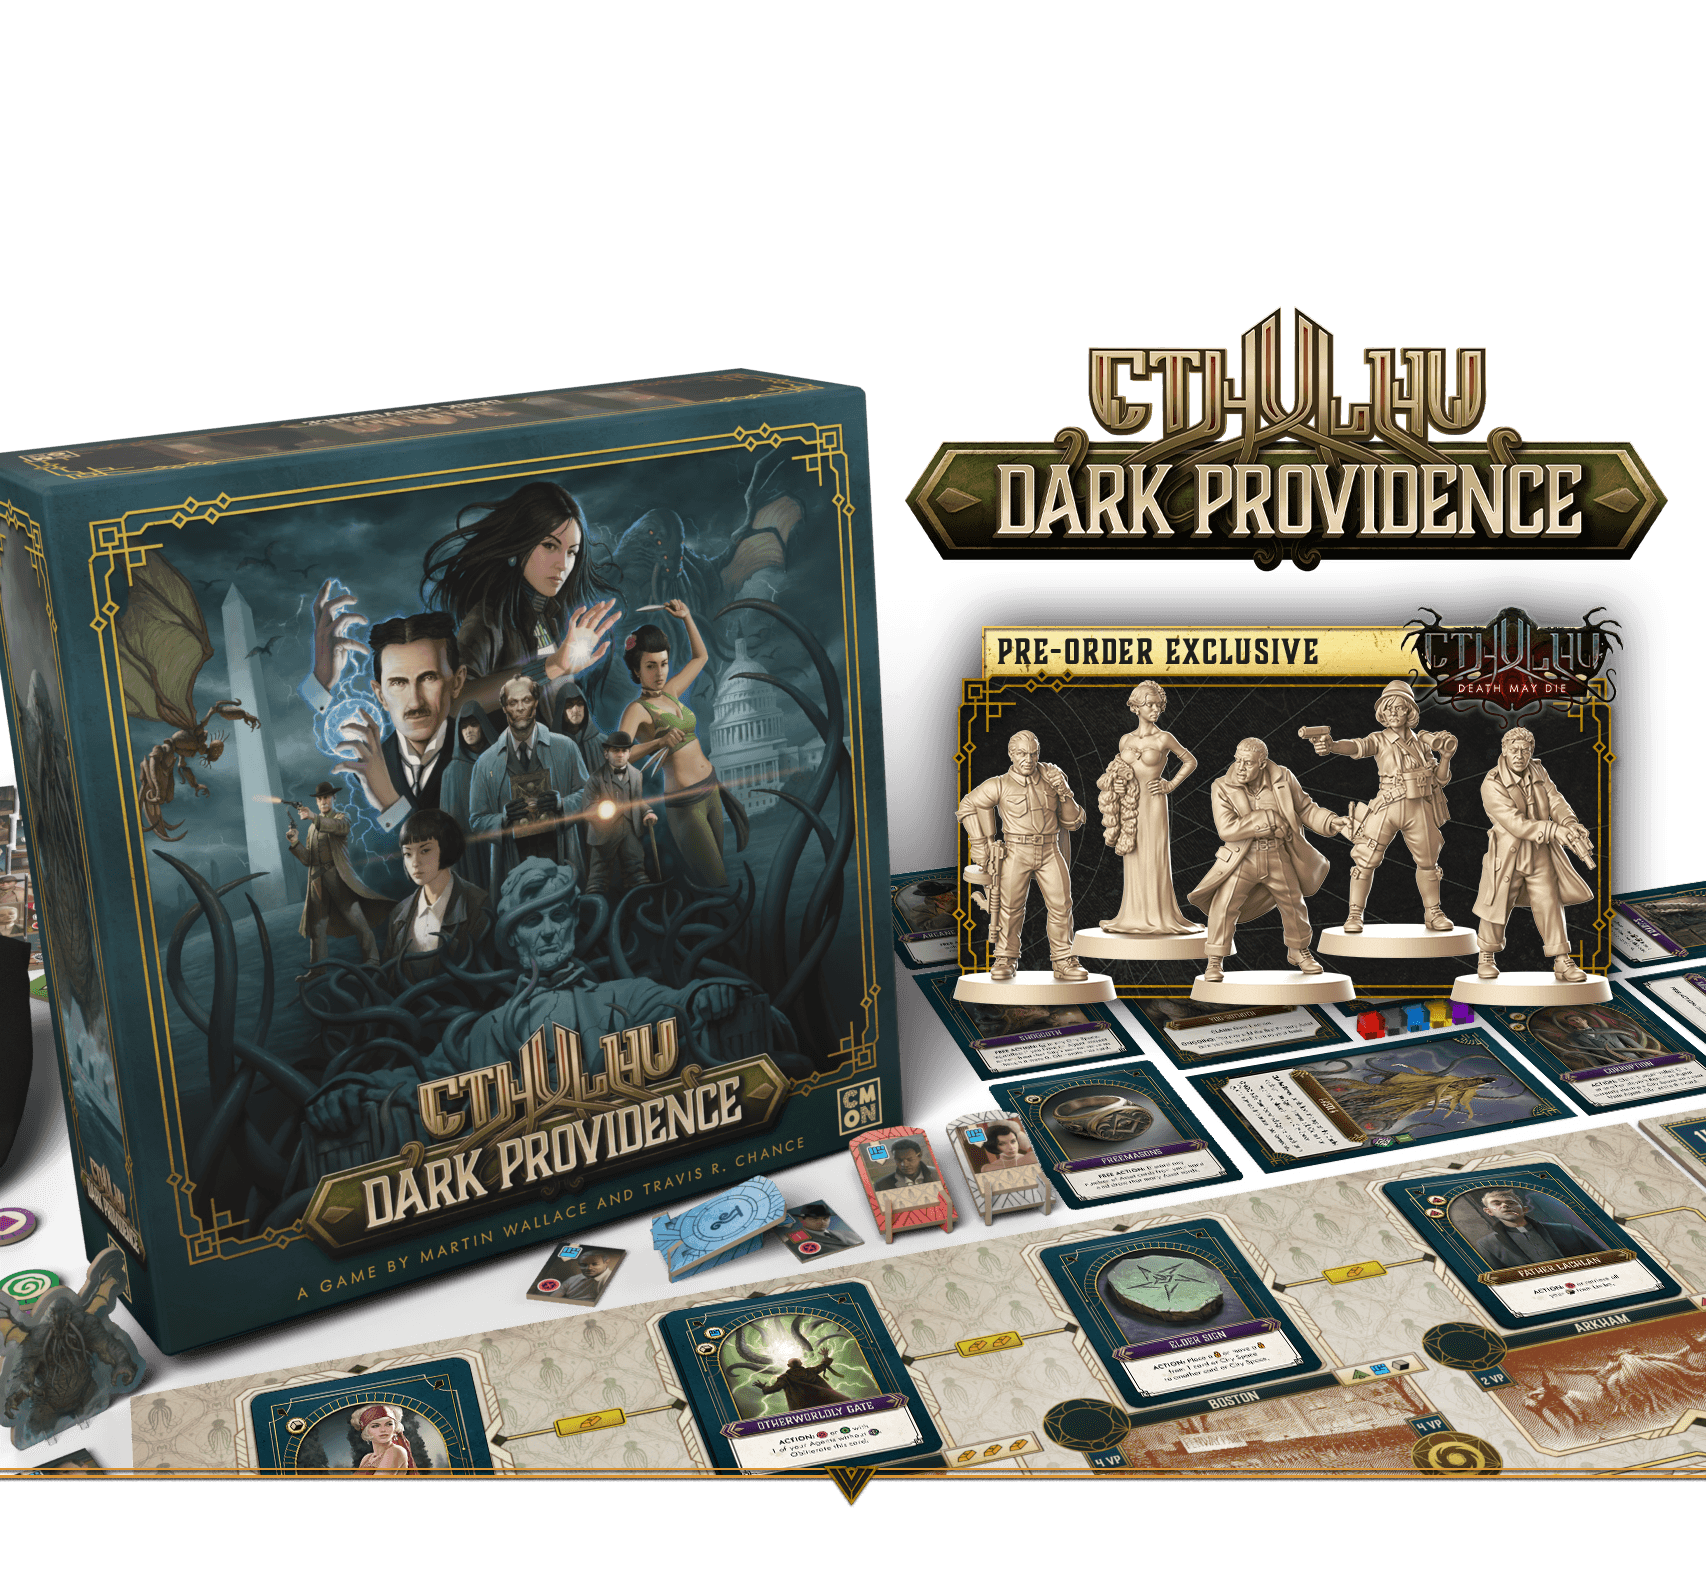 Cthulhu: Dark Providence